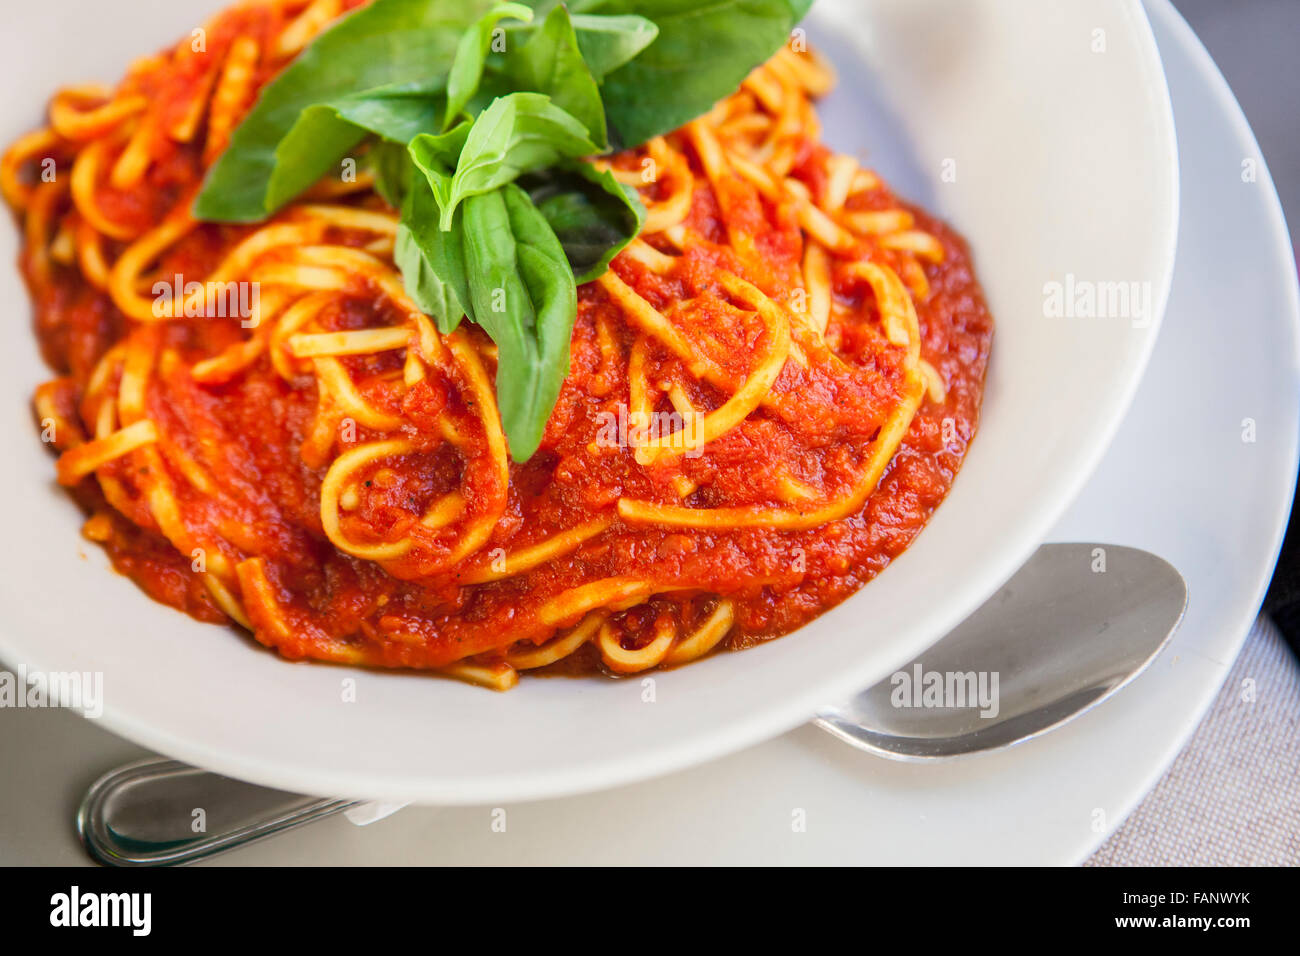 Teller mit Spaghetti Bolognese mit Basilikum garnieren. Nahaufnahme mit selektiven Fokus erschossen Stockfoto